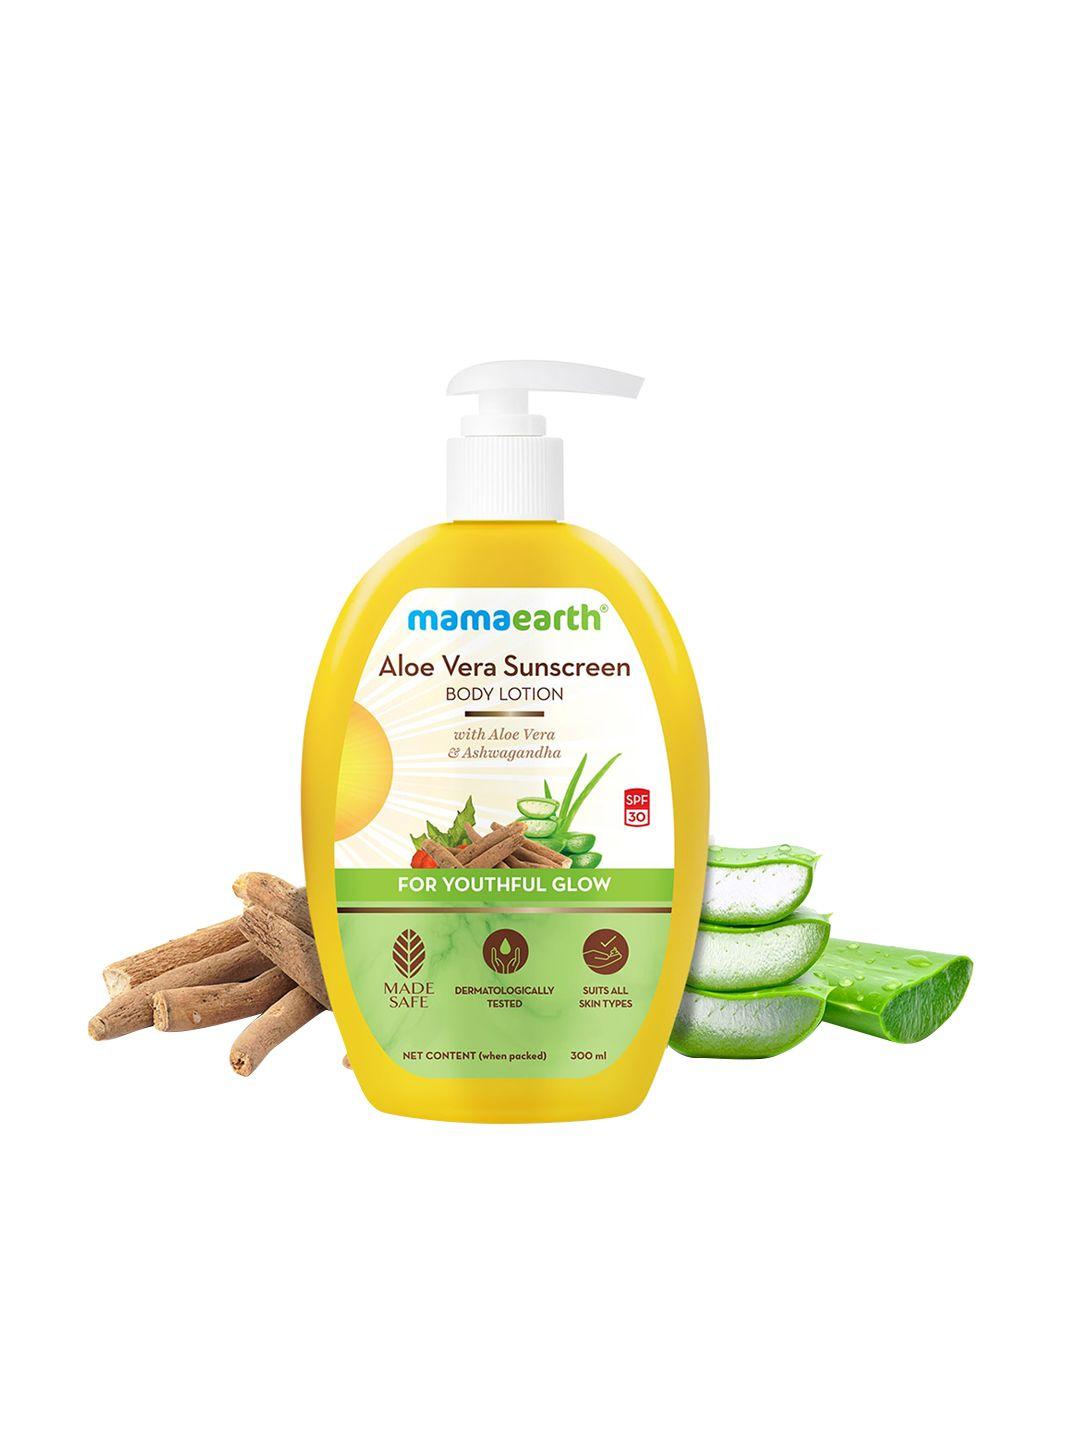 mamaearth aloe vera spf 30 sunscreen body lotion with ashwagandha - 300 ml